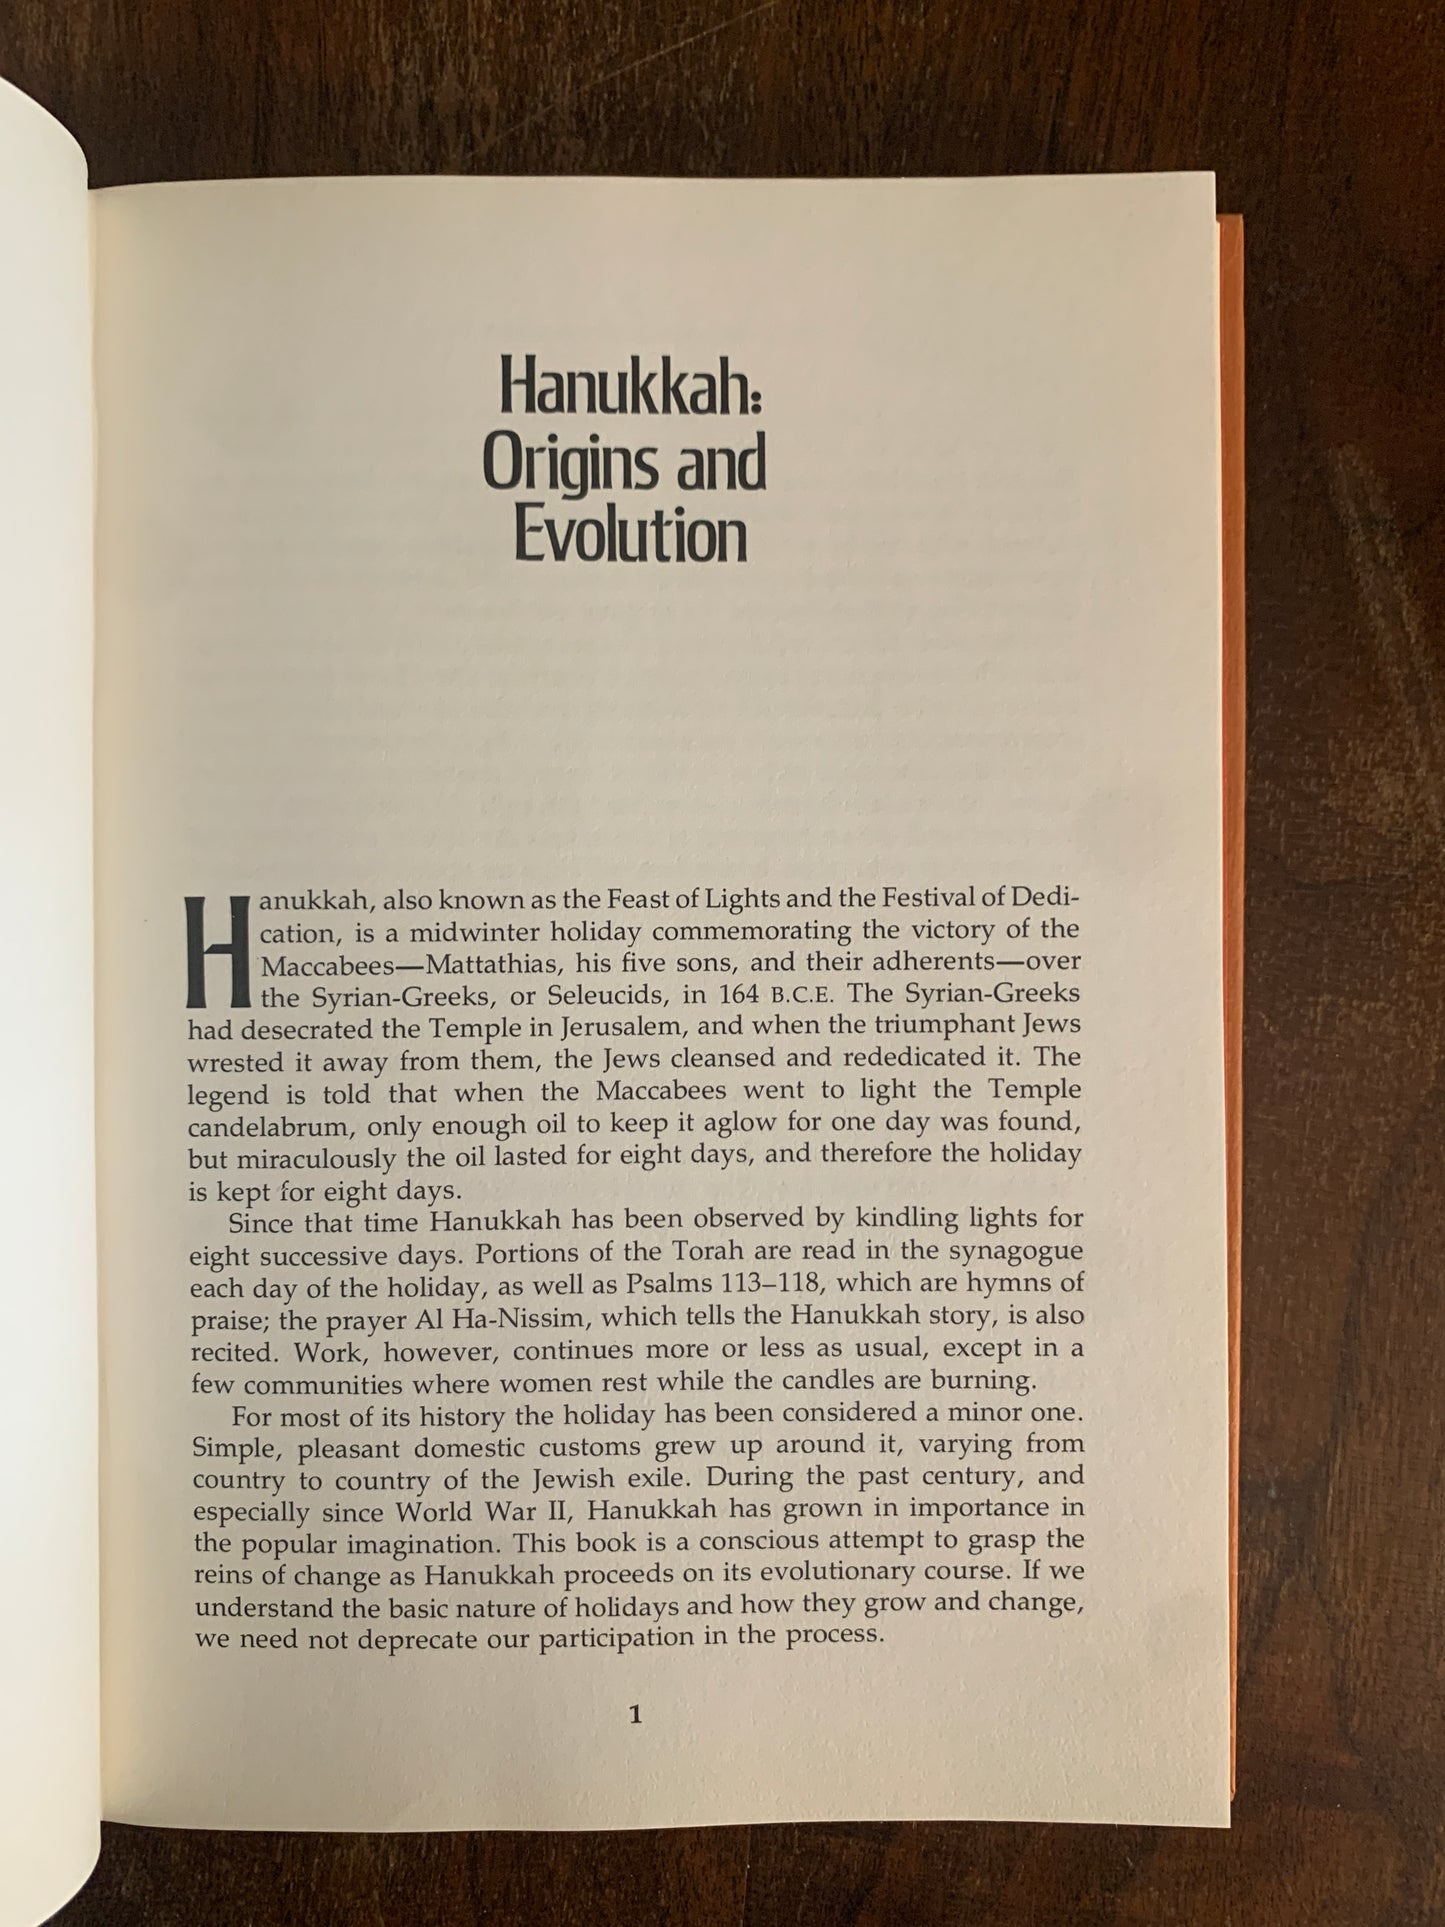 The Hanukkah Book by Mae Shaffer Rockland 1975